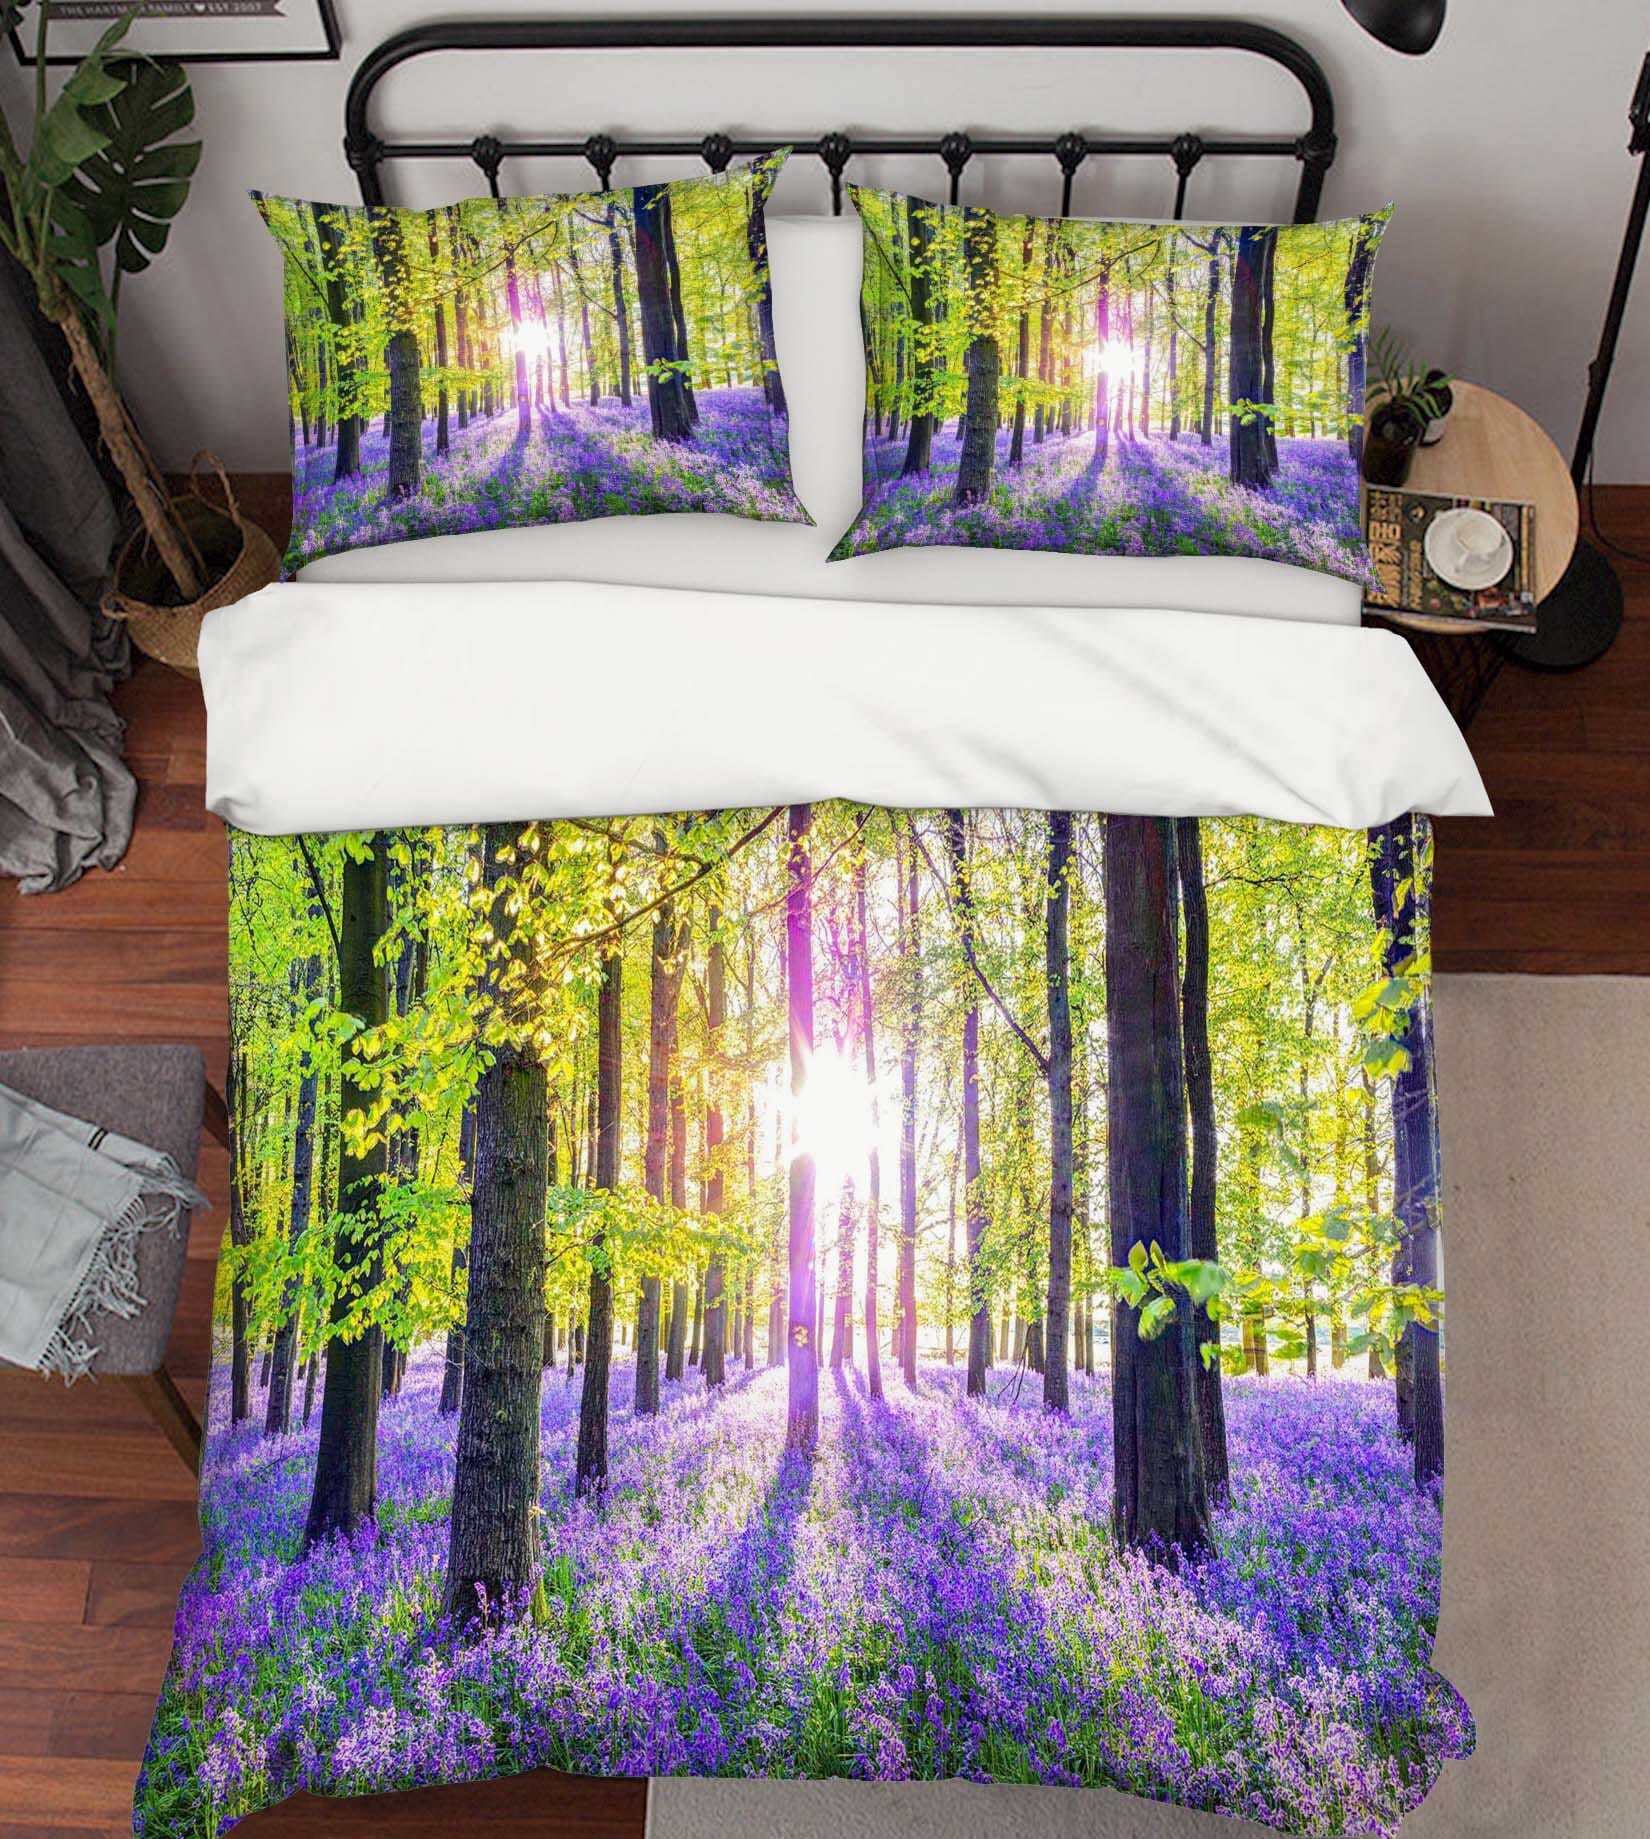 3D Purple Flower Sea 2017 Assaf Frank Bedding Bed Pillowcases Quilt Quiet Covers AJ Creativity Home 